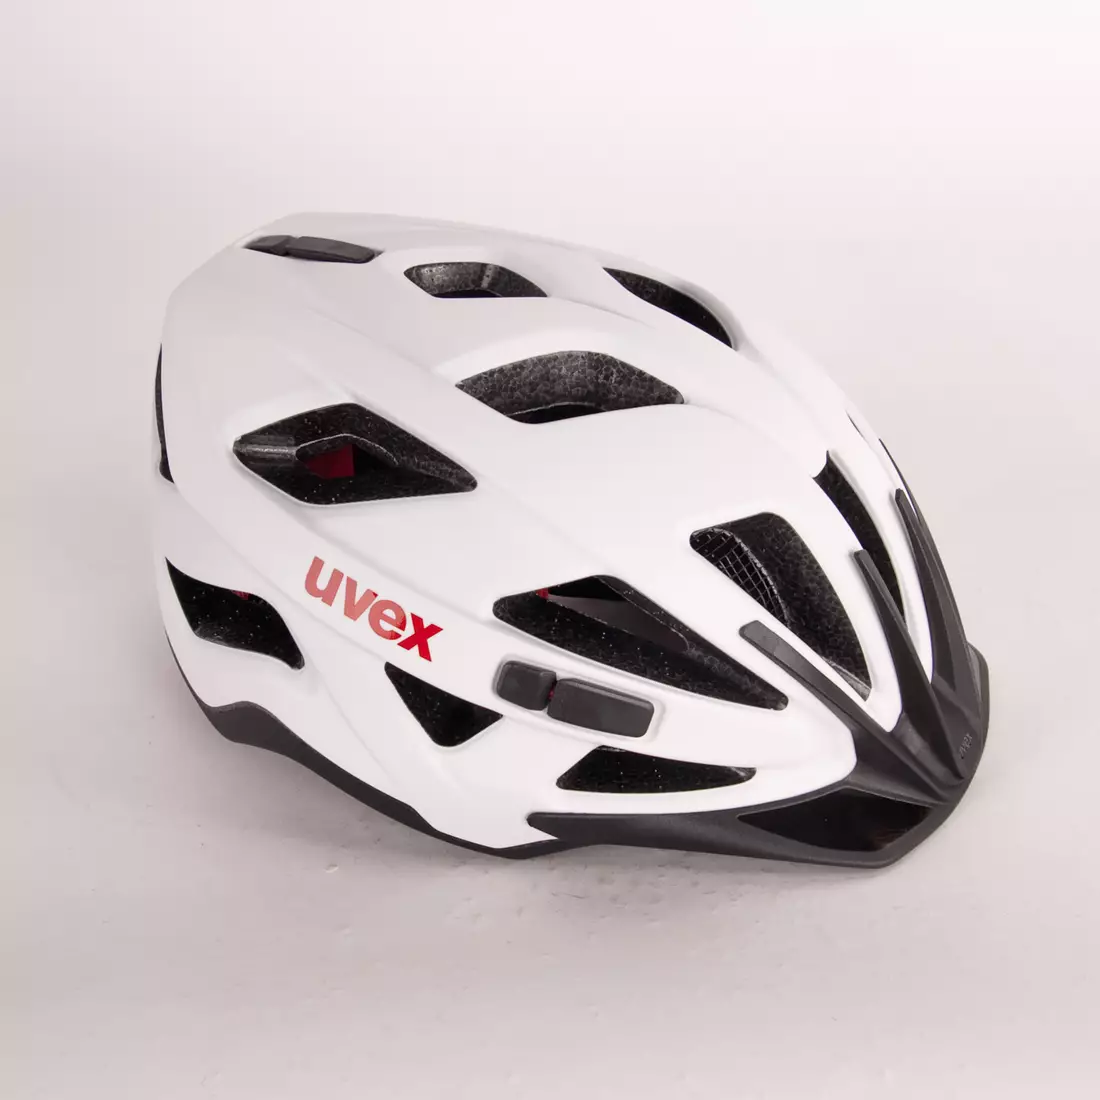 UVEX Active CC bicycle helmet, white and black